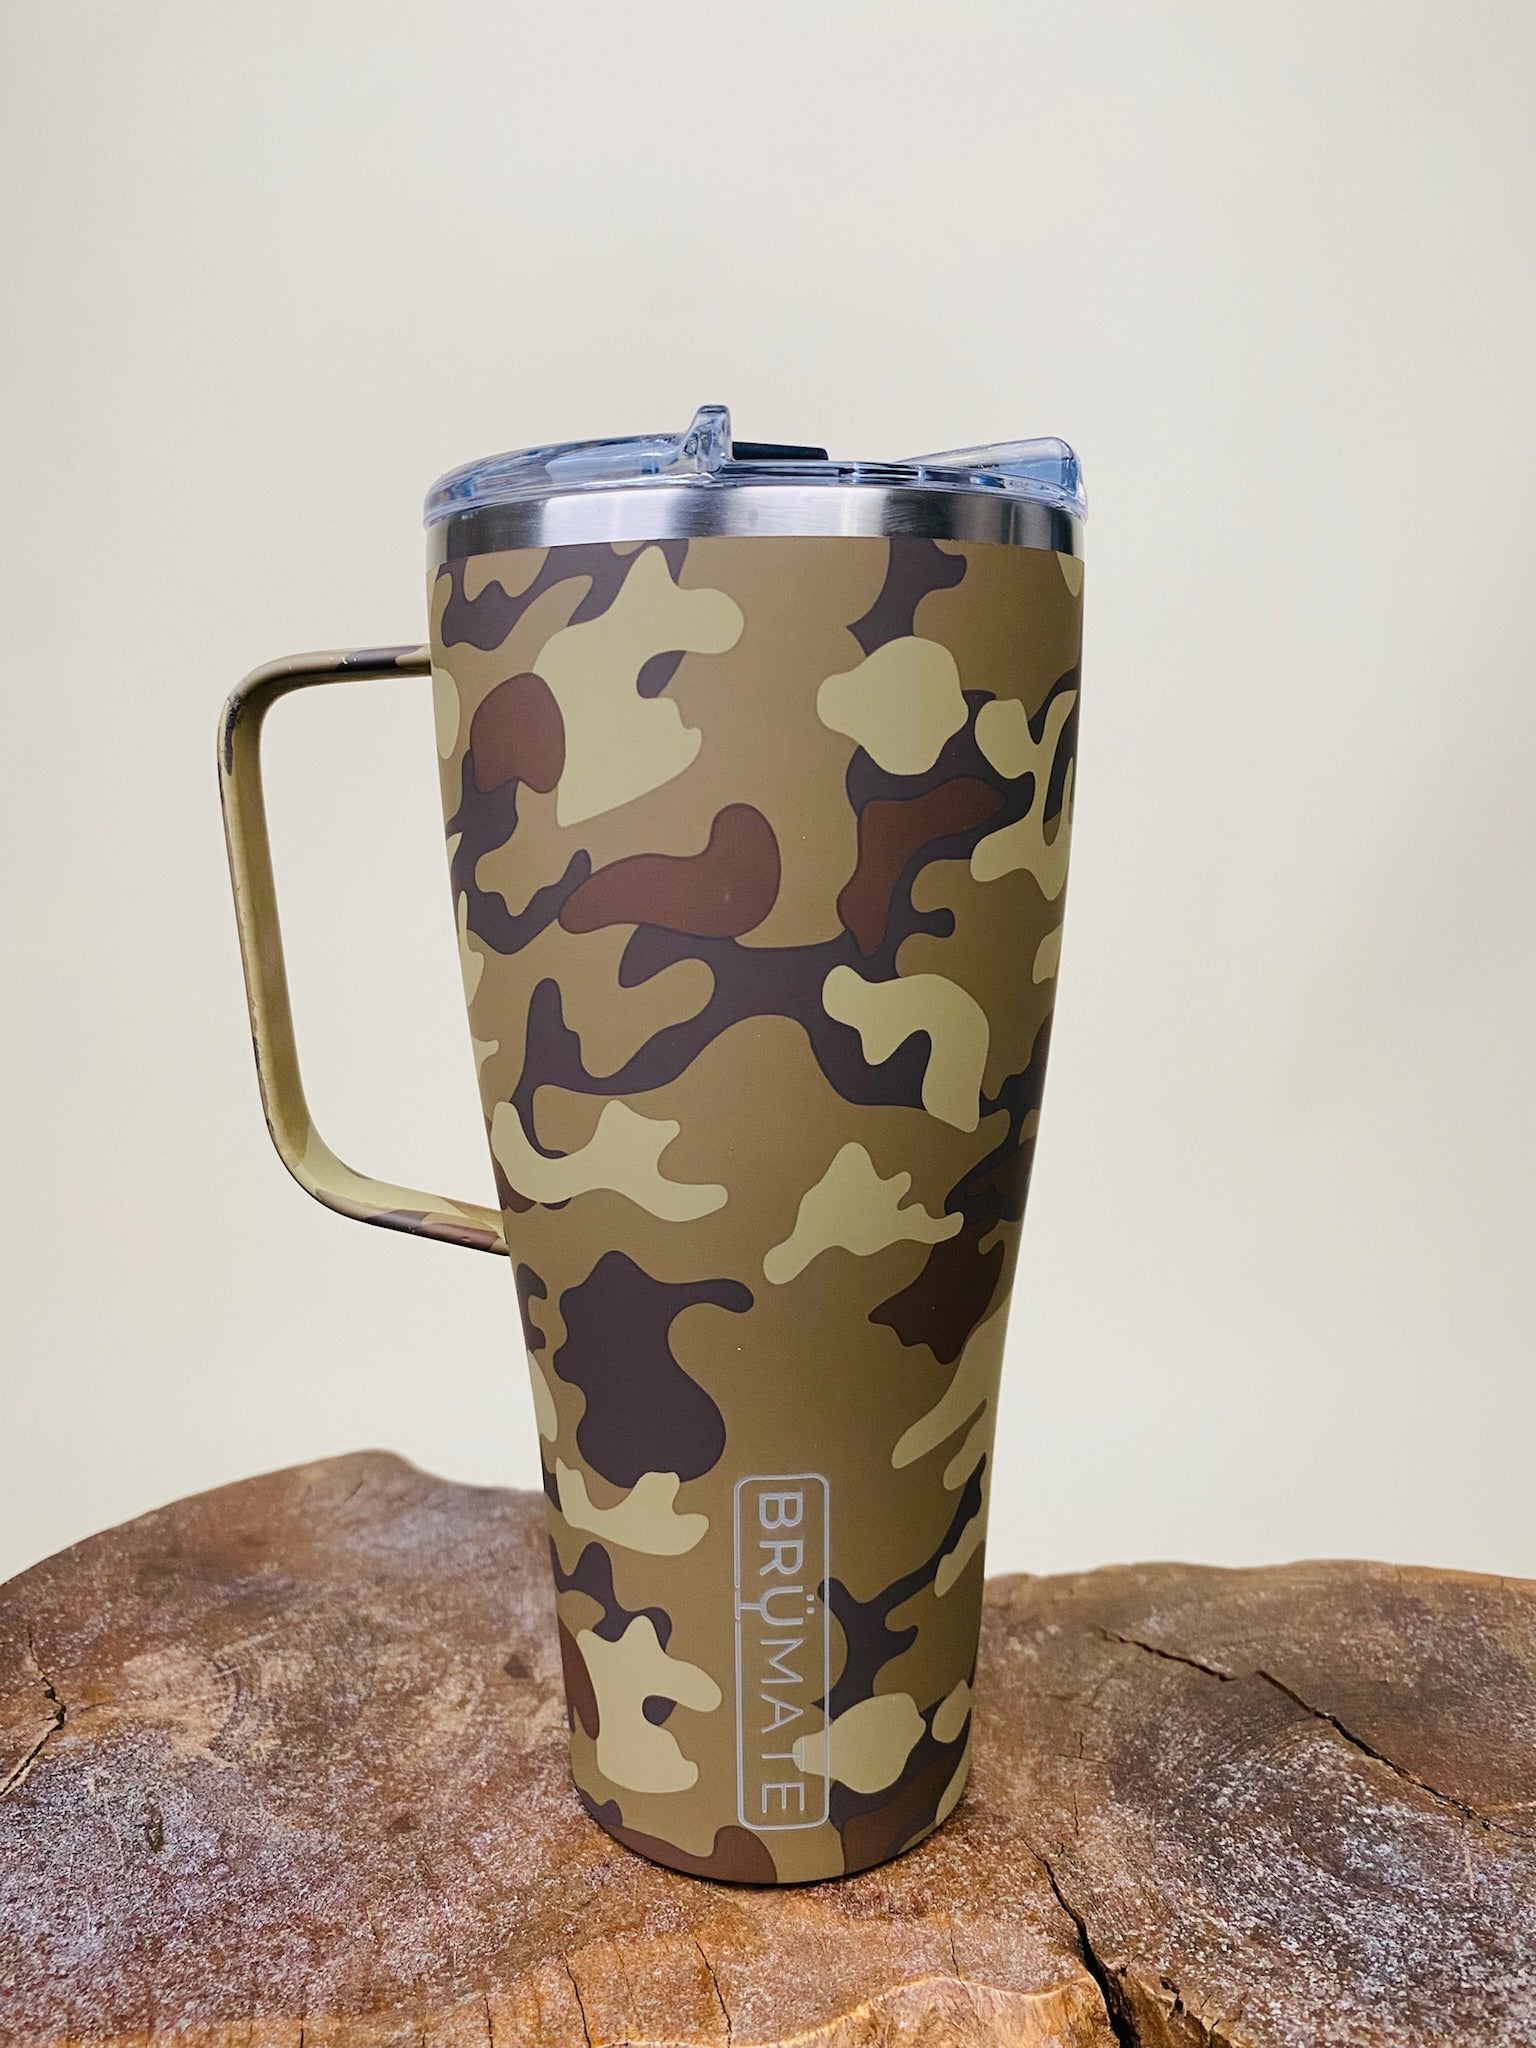 Brumate Toddy XL 32oz Coffee Mug, Corporate Gifts